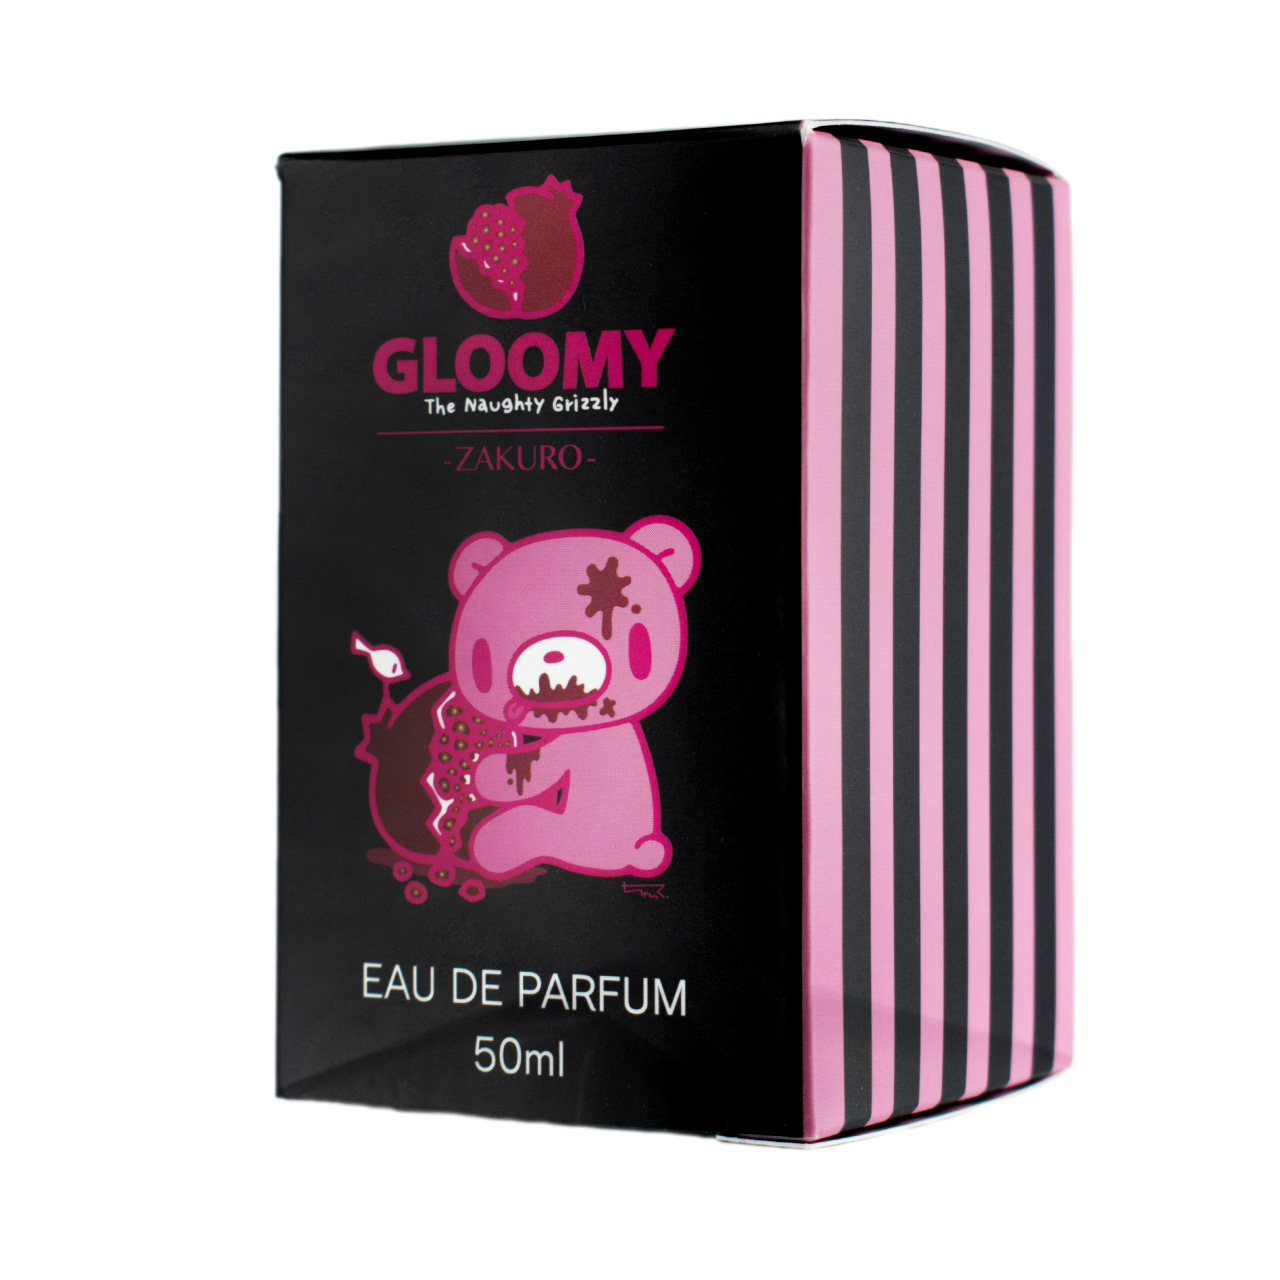 Gloomy The Naughty Grizzly Gets Official Perfume Moshi Moshi Nippon もしもしにっぽん